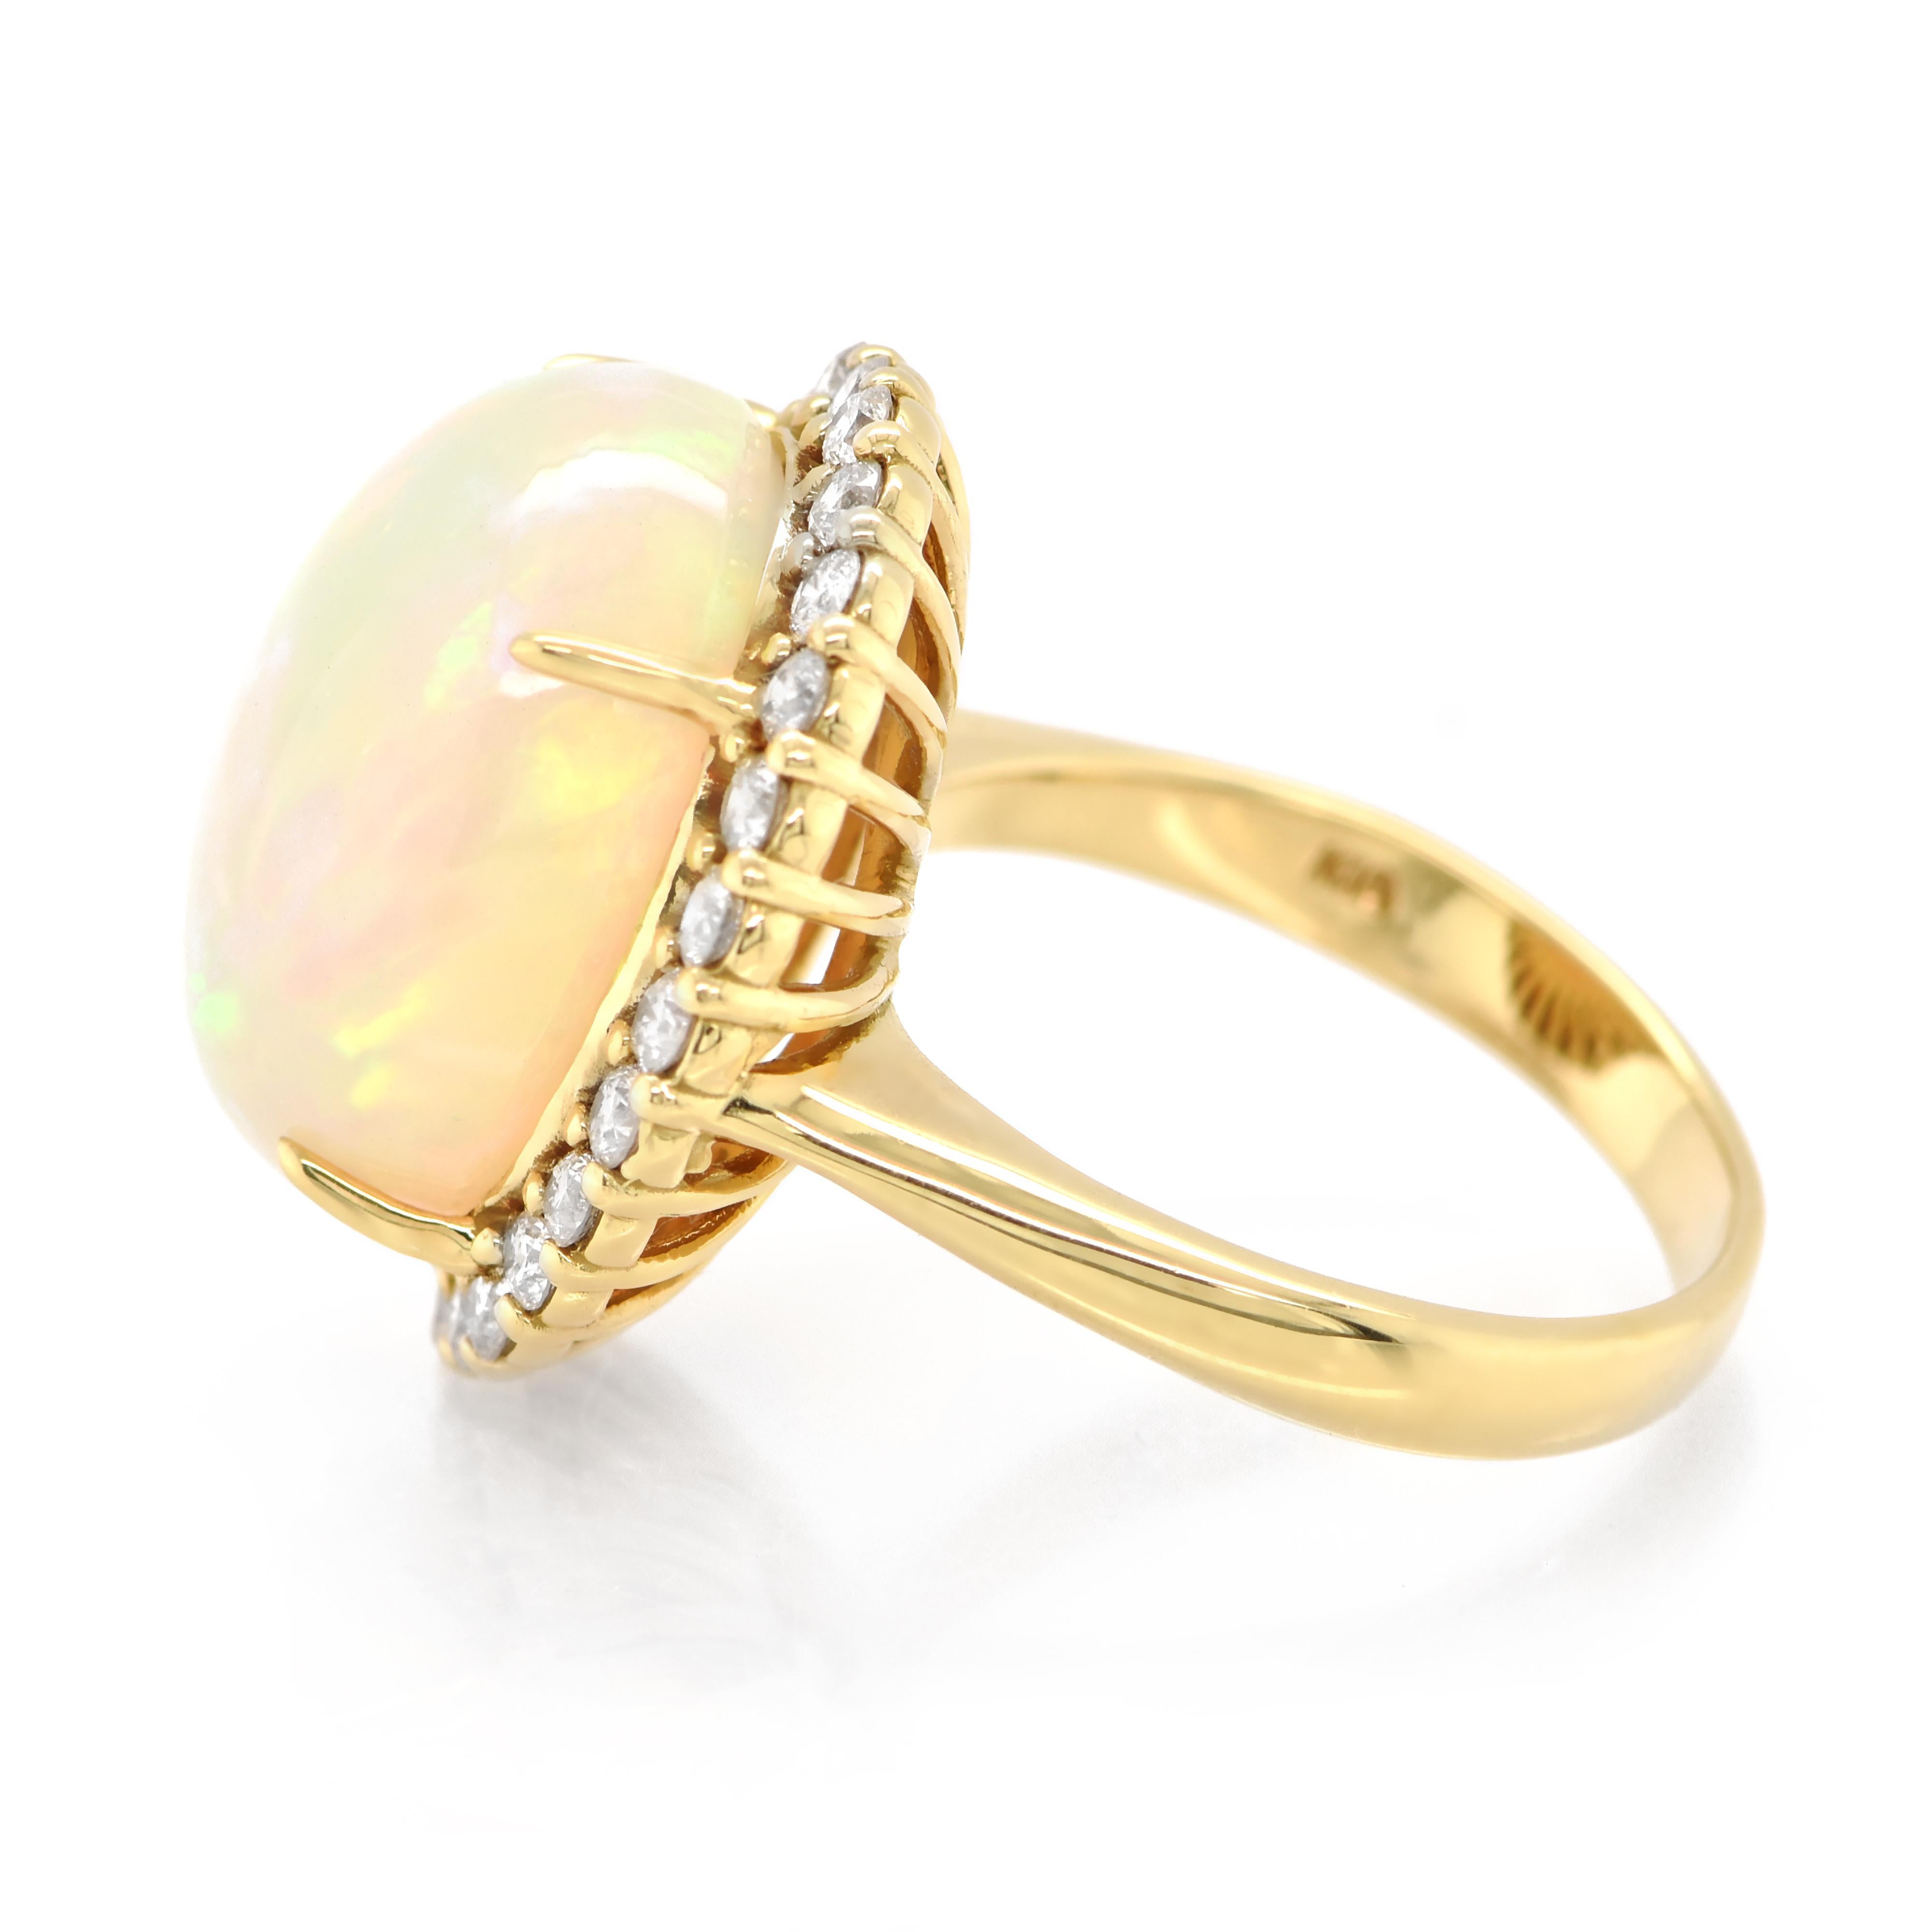 Modern 9.68 Carat Natural White, Ethiopian Opal and Diamond Ring Set in 18K Gold